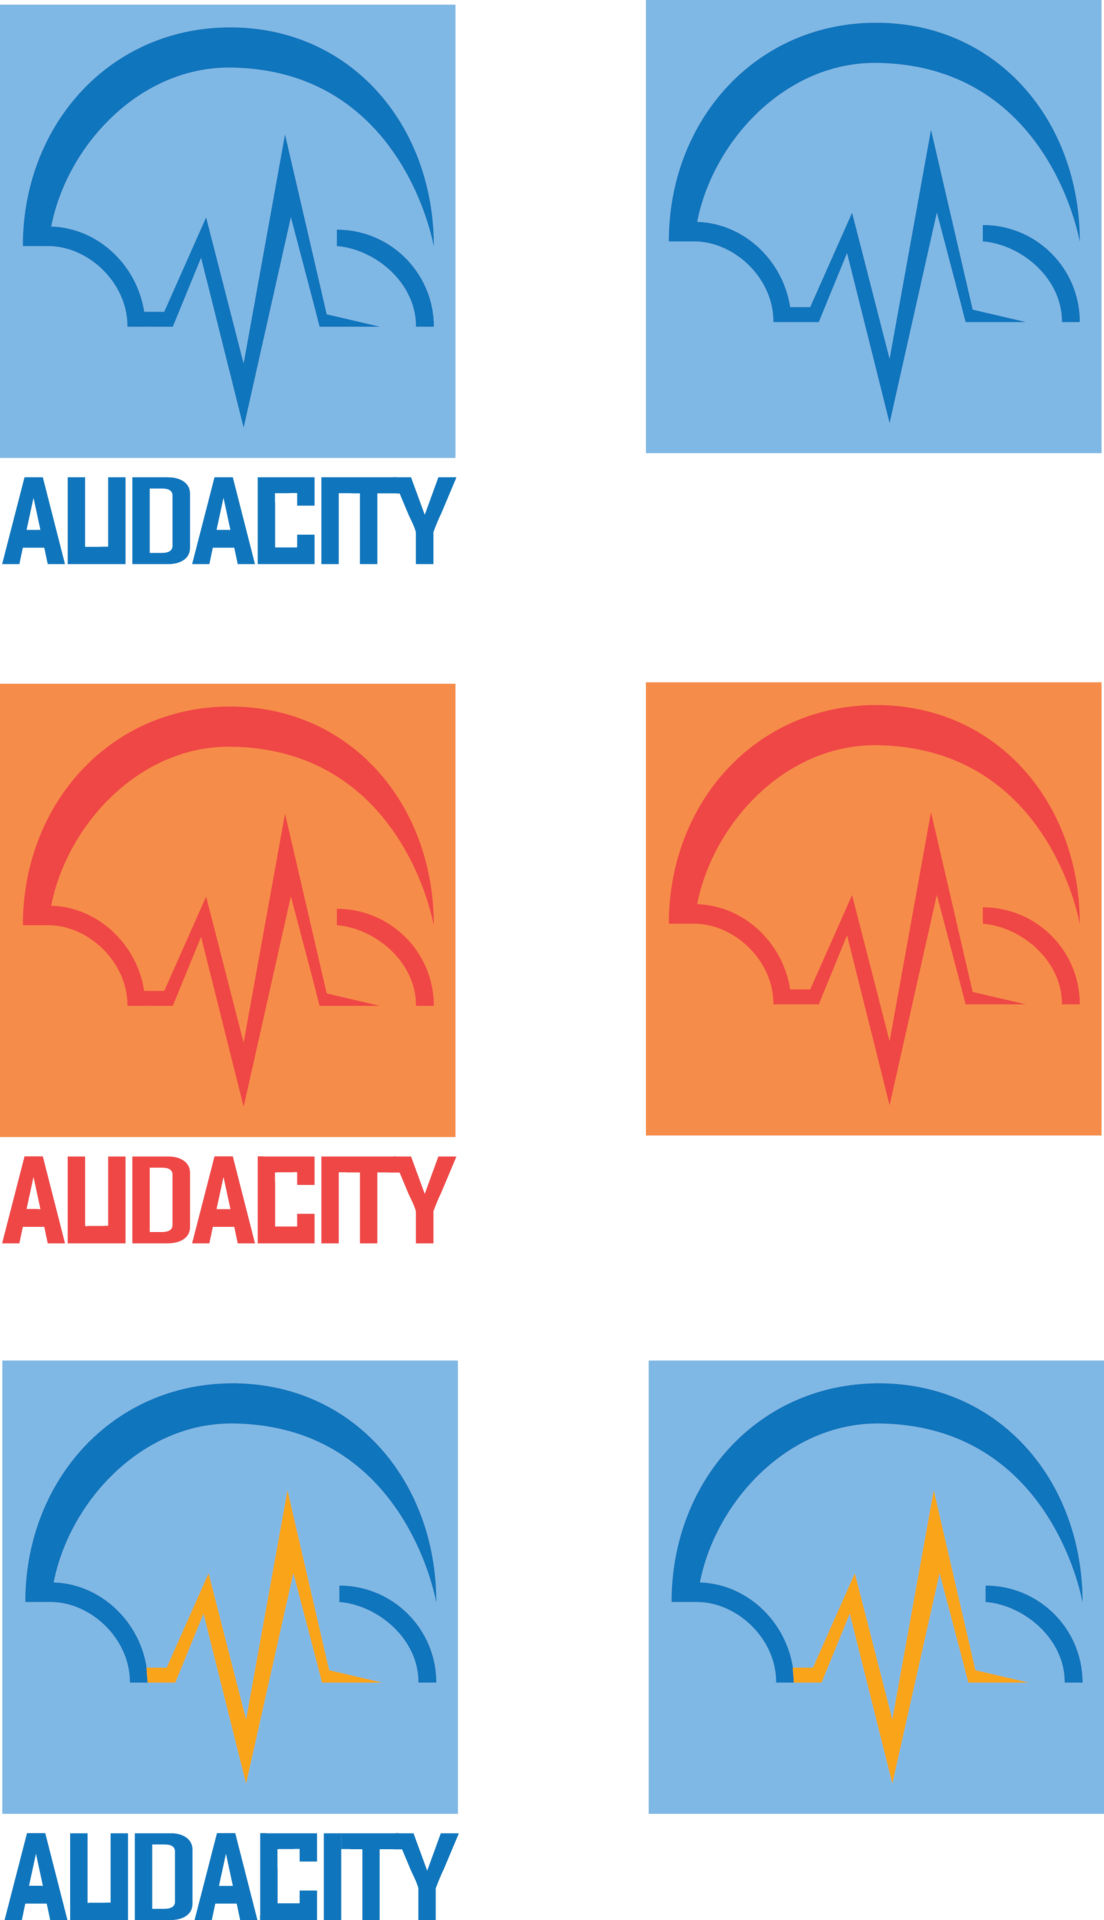 Audacity Logo - Remade the audacity logo